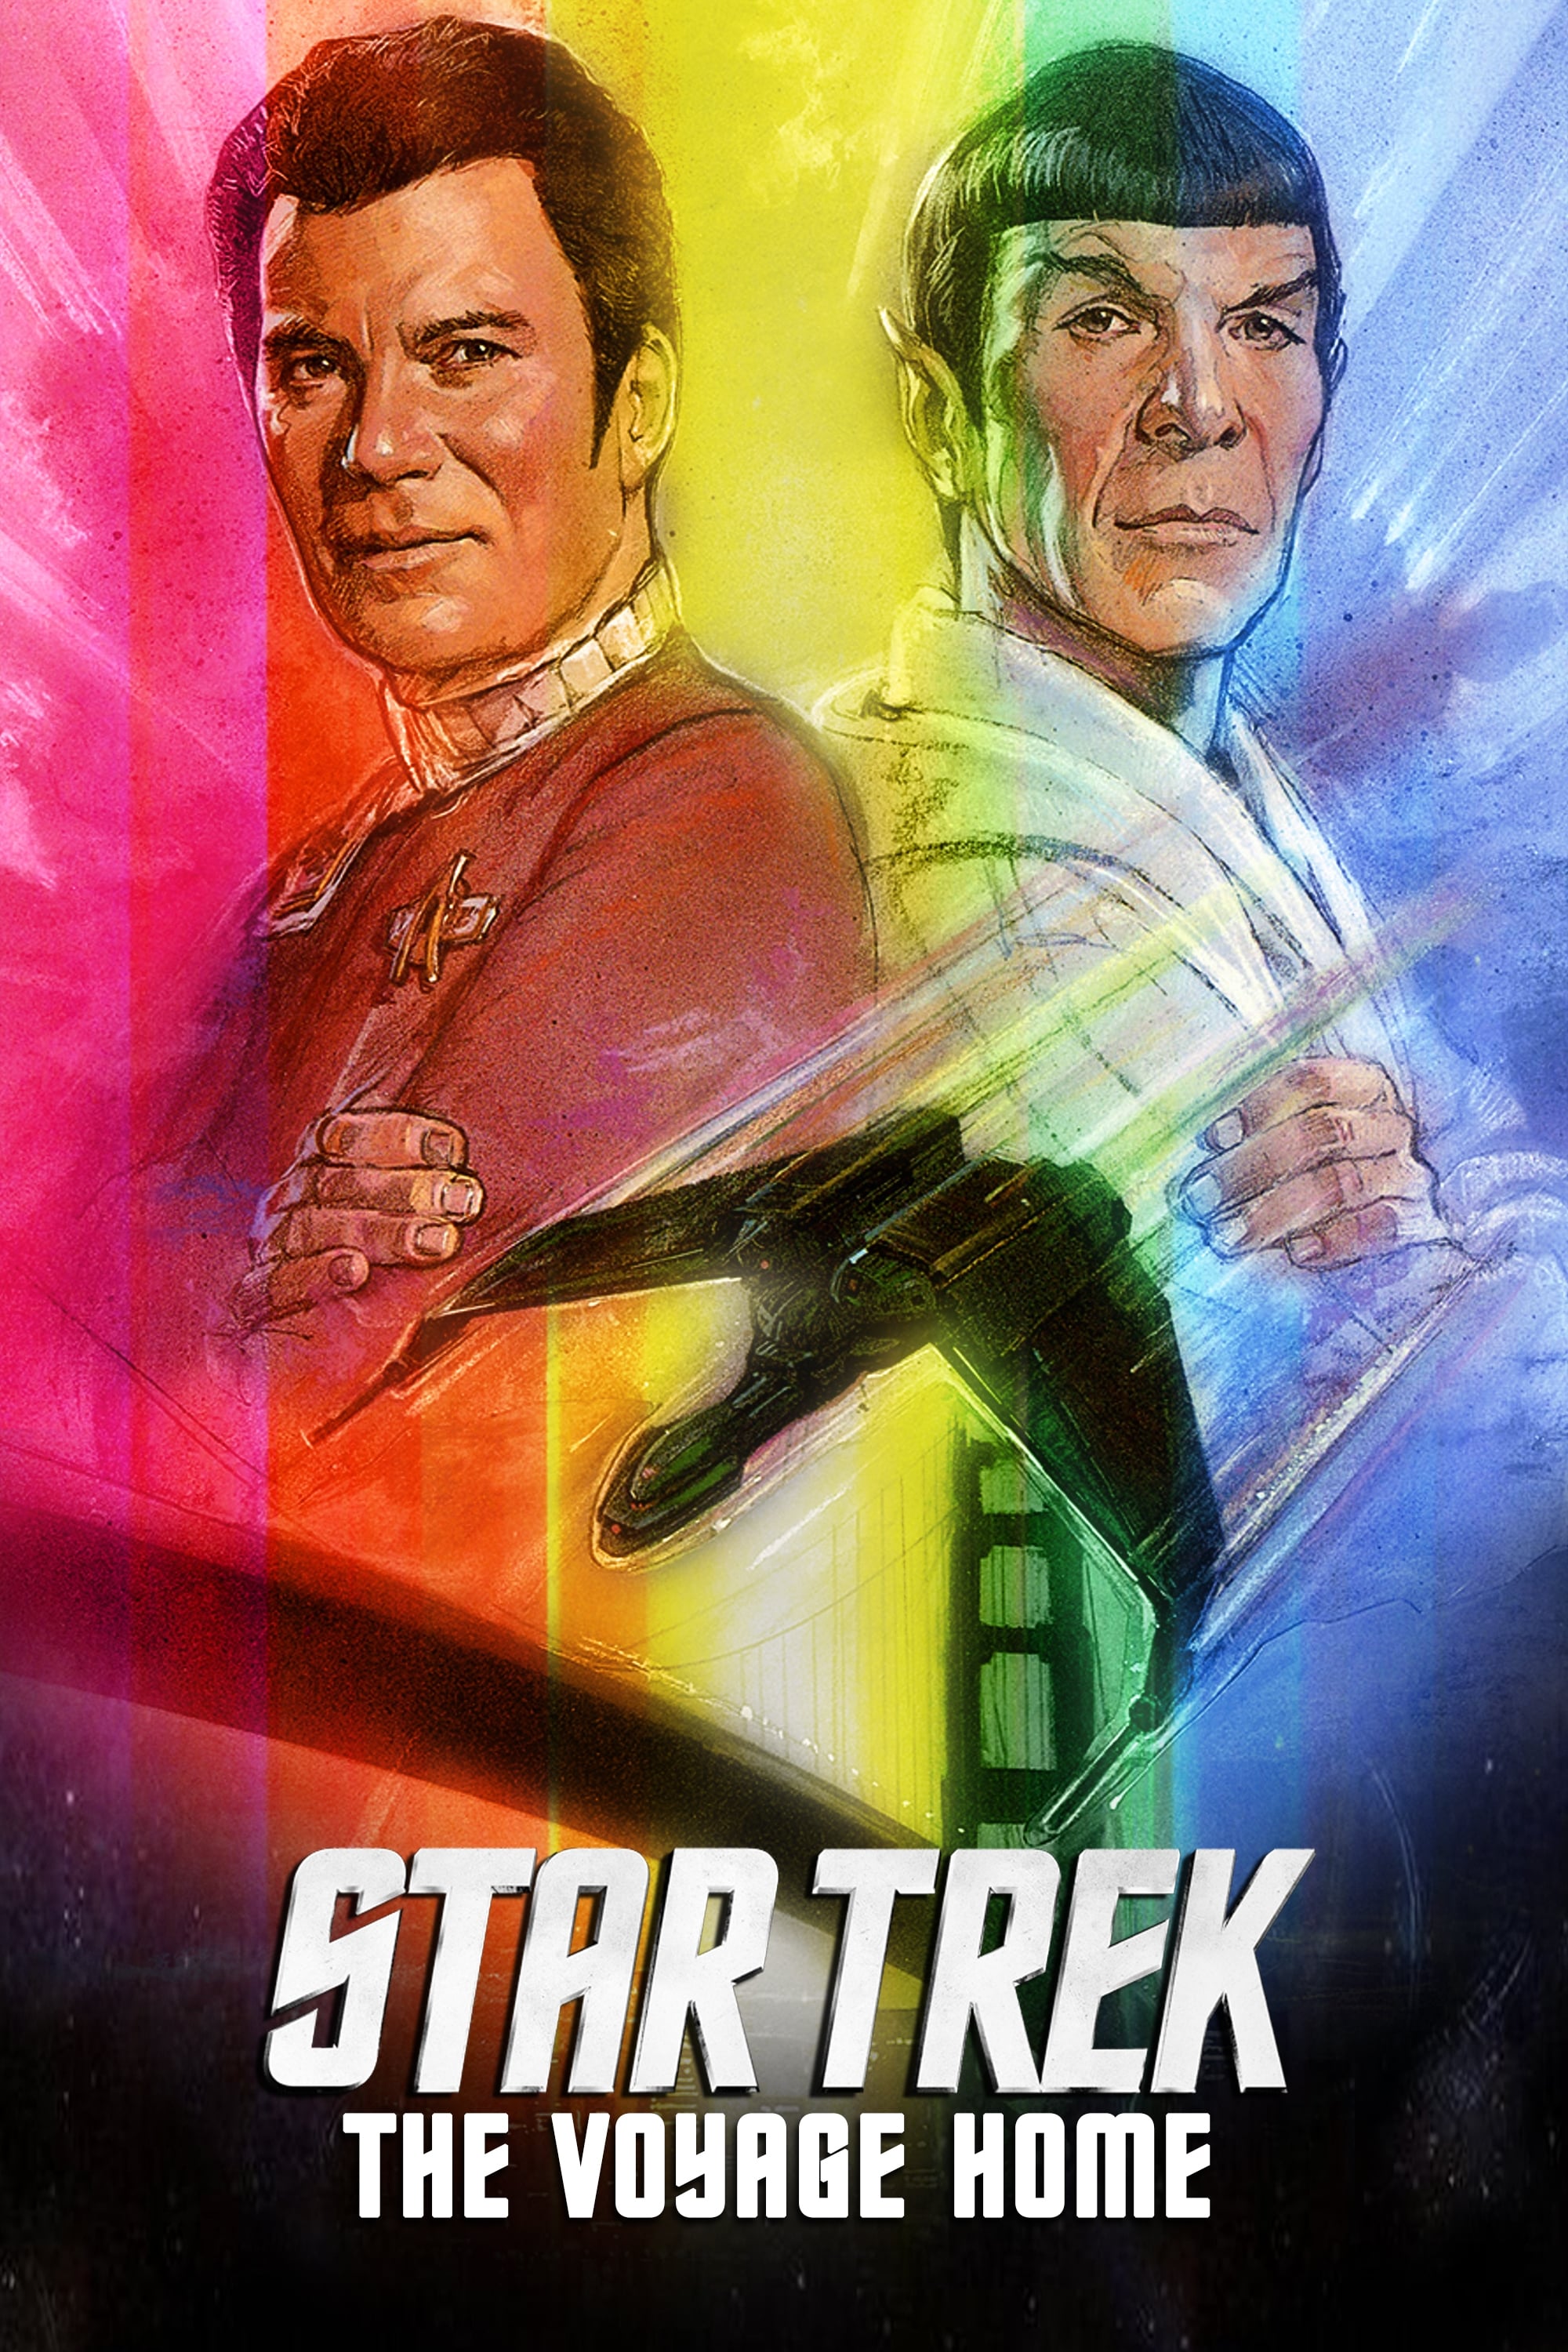 Star Trek IV : Retour sur Terre